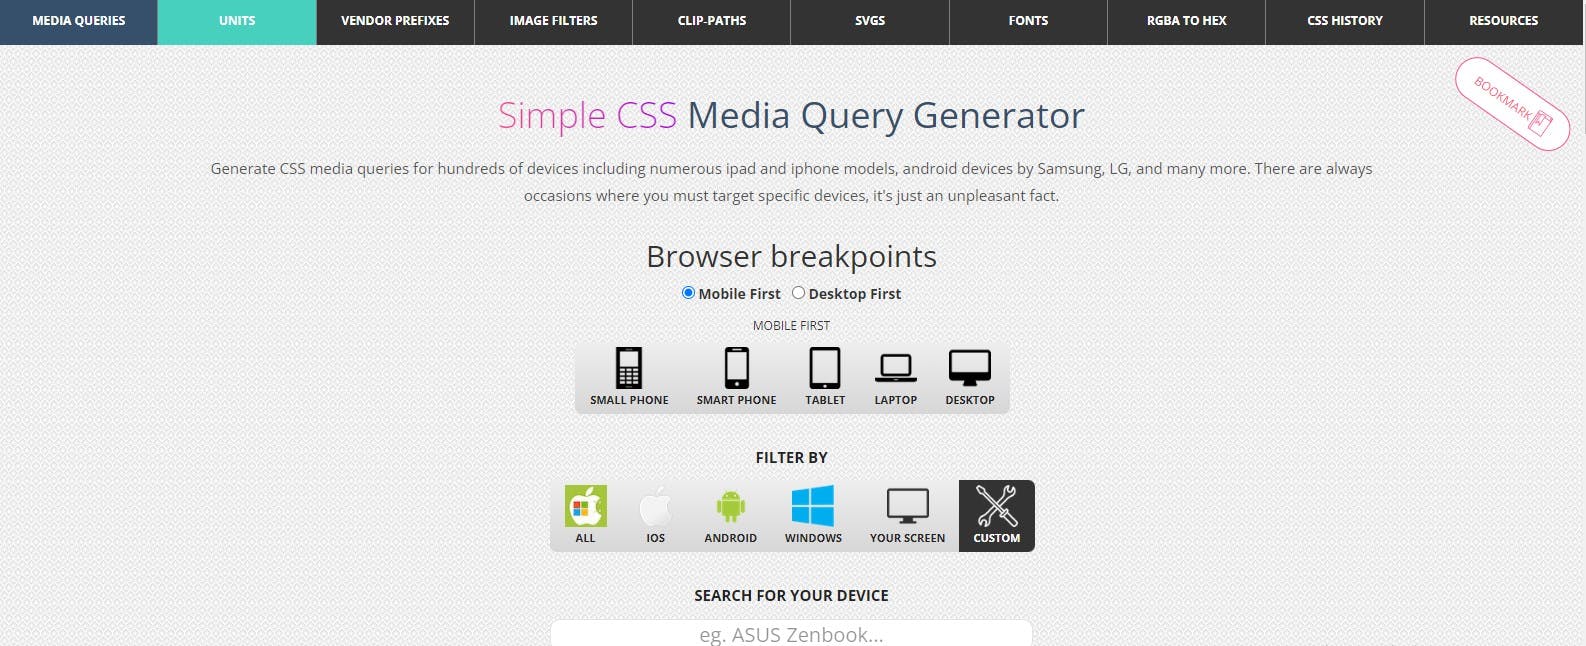 SimpleCSS Media Query Generator